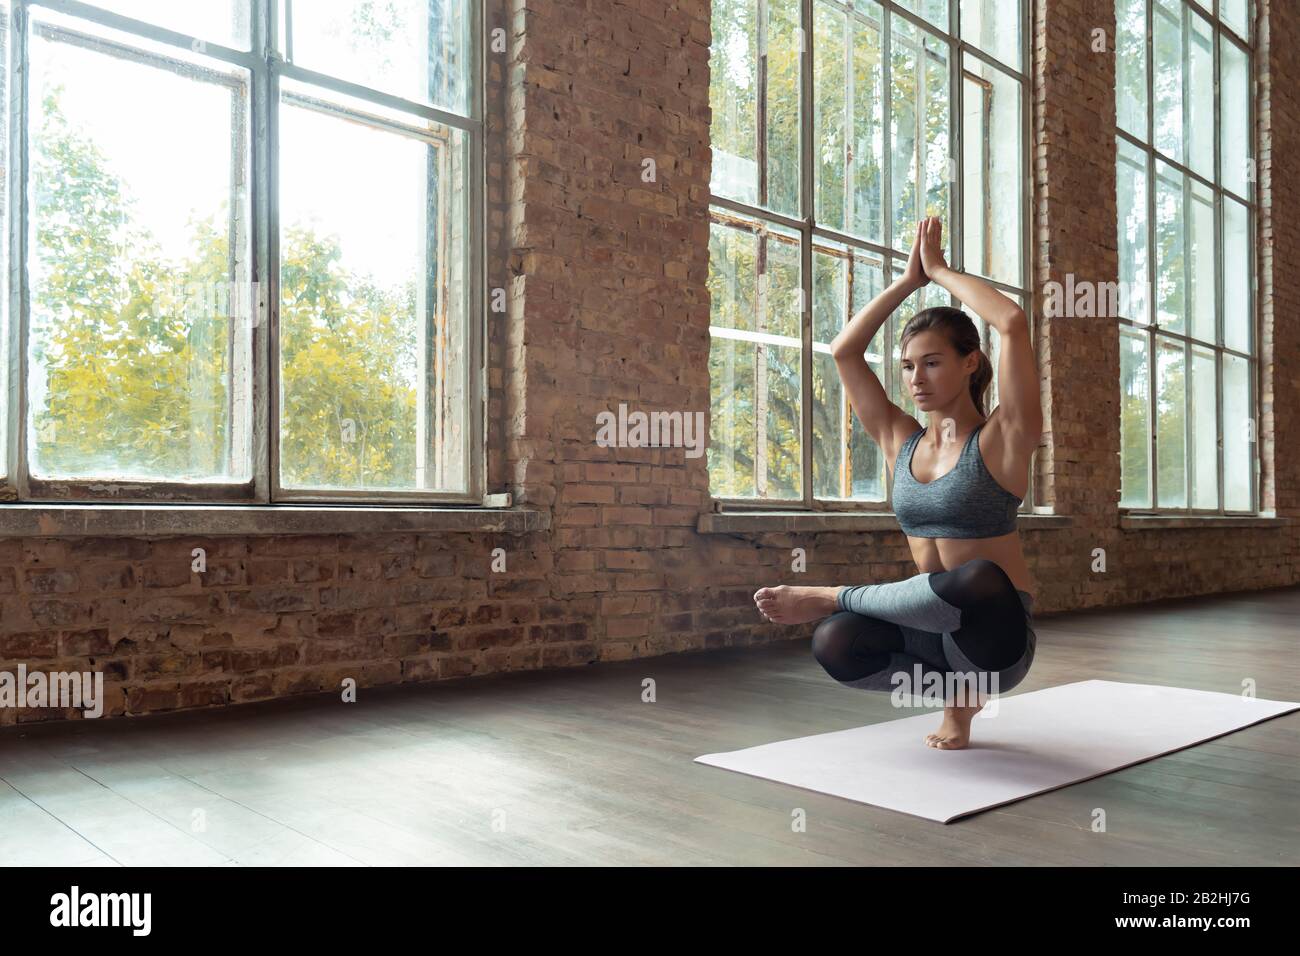 Young slim girl practice hatha yoga toe stand balance posture healthy lifestyle. Stock Photo